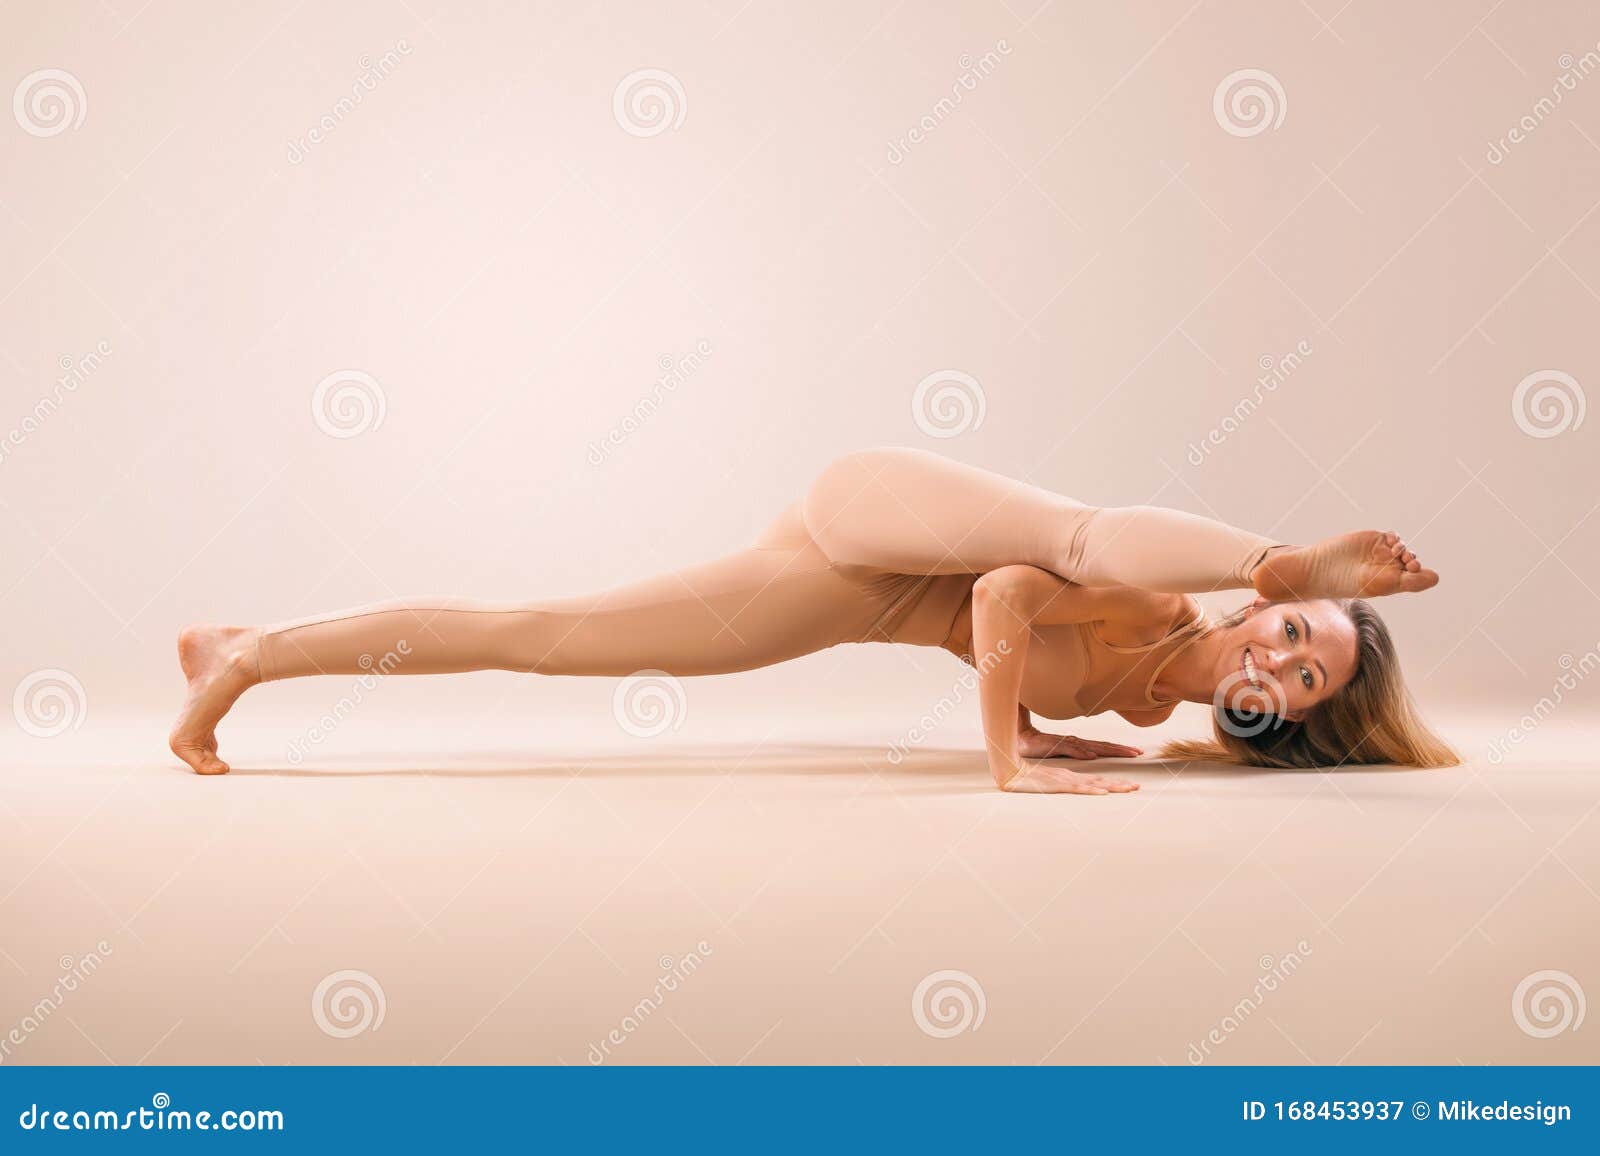 Nude Beautiful Athletic